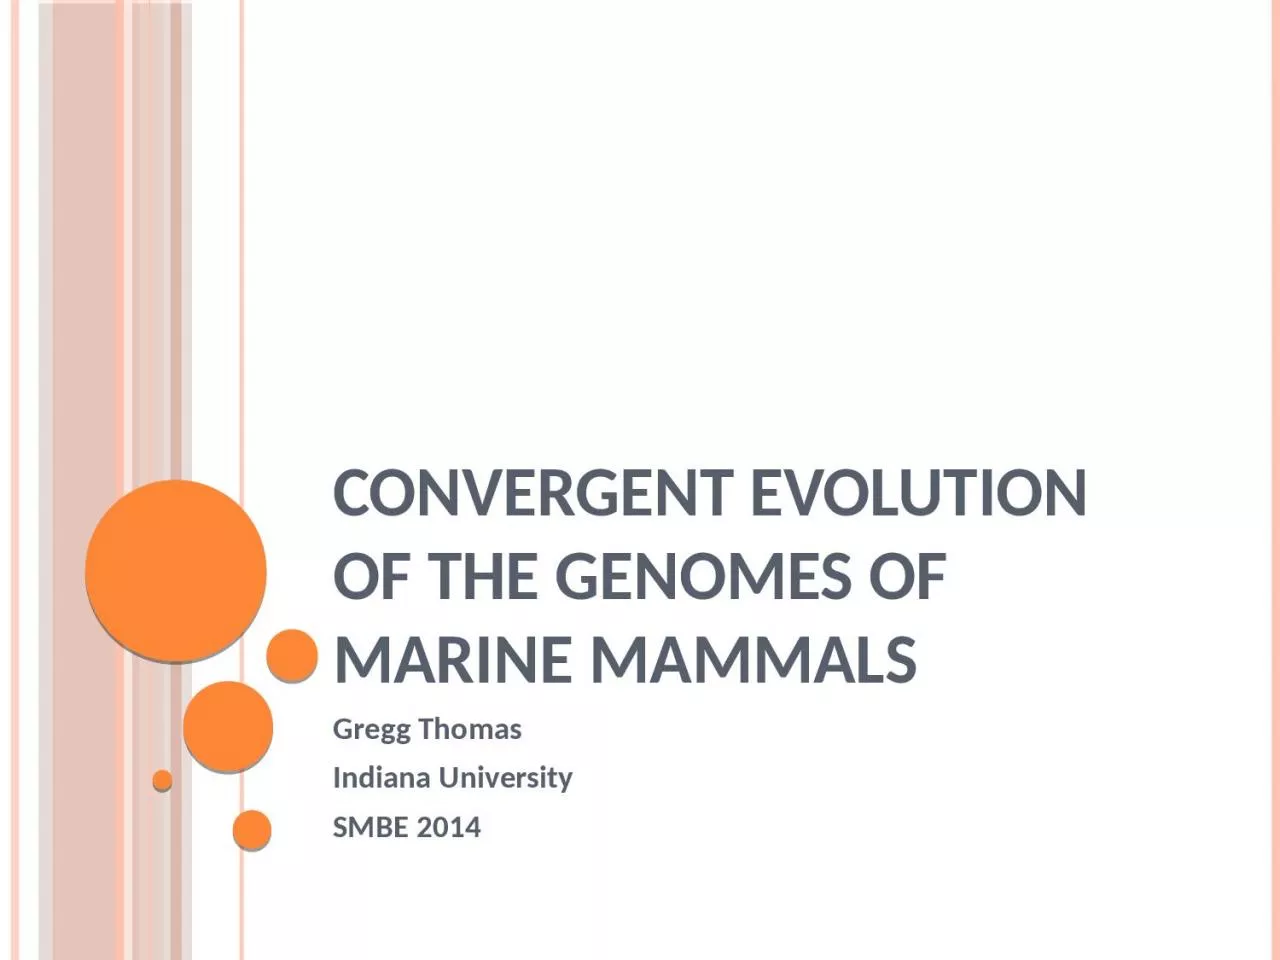 Convergent evolution of the genomes of marine mammals